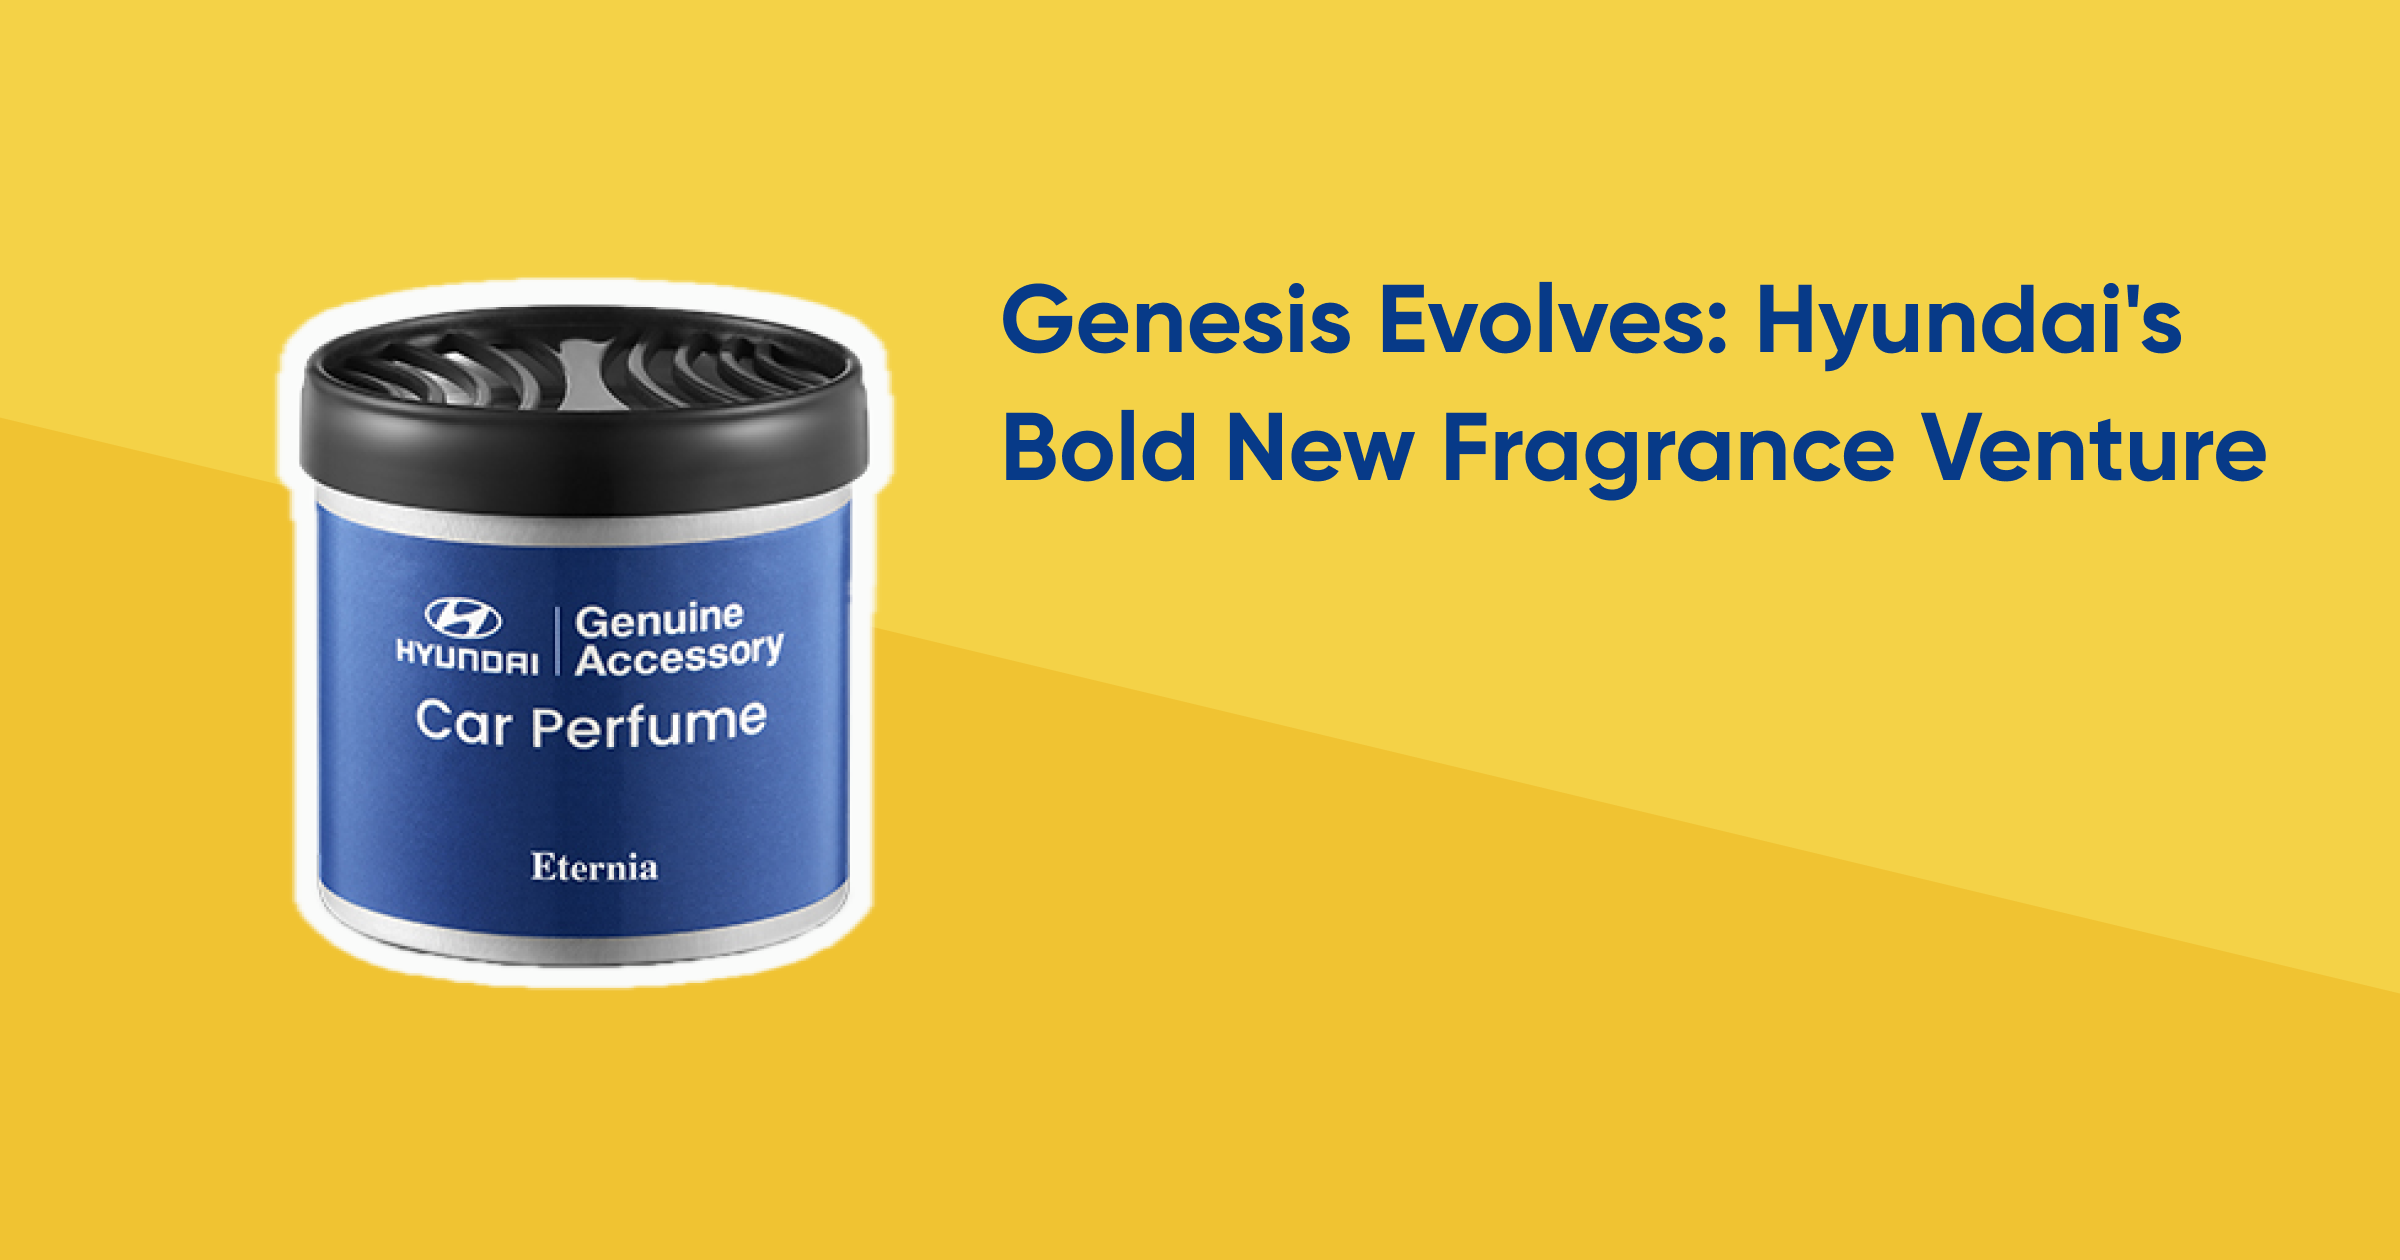 Genesis Evolves: Hyundai's Bold New Fragrance Venture